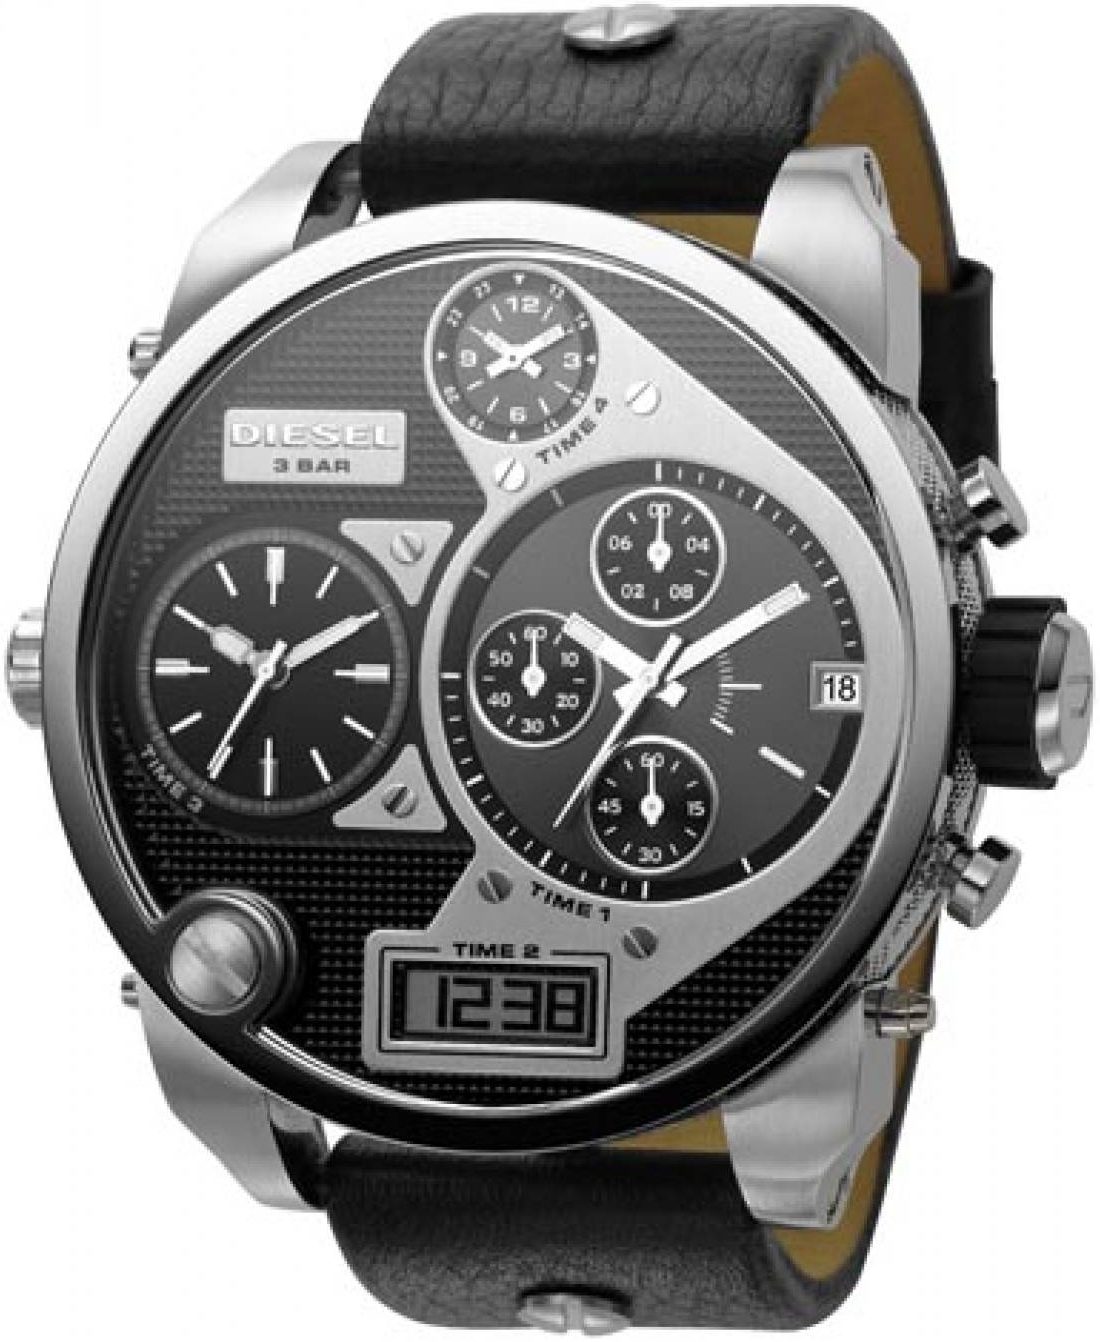 diesel oversized watch. Diesel DZ7125 WATCH; Model